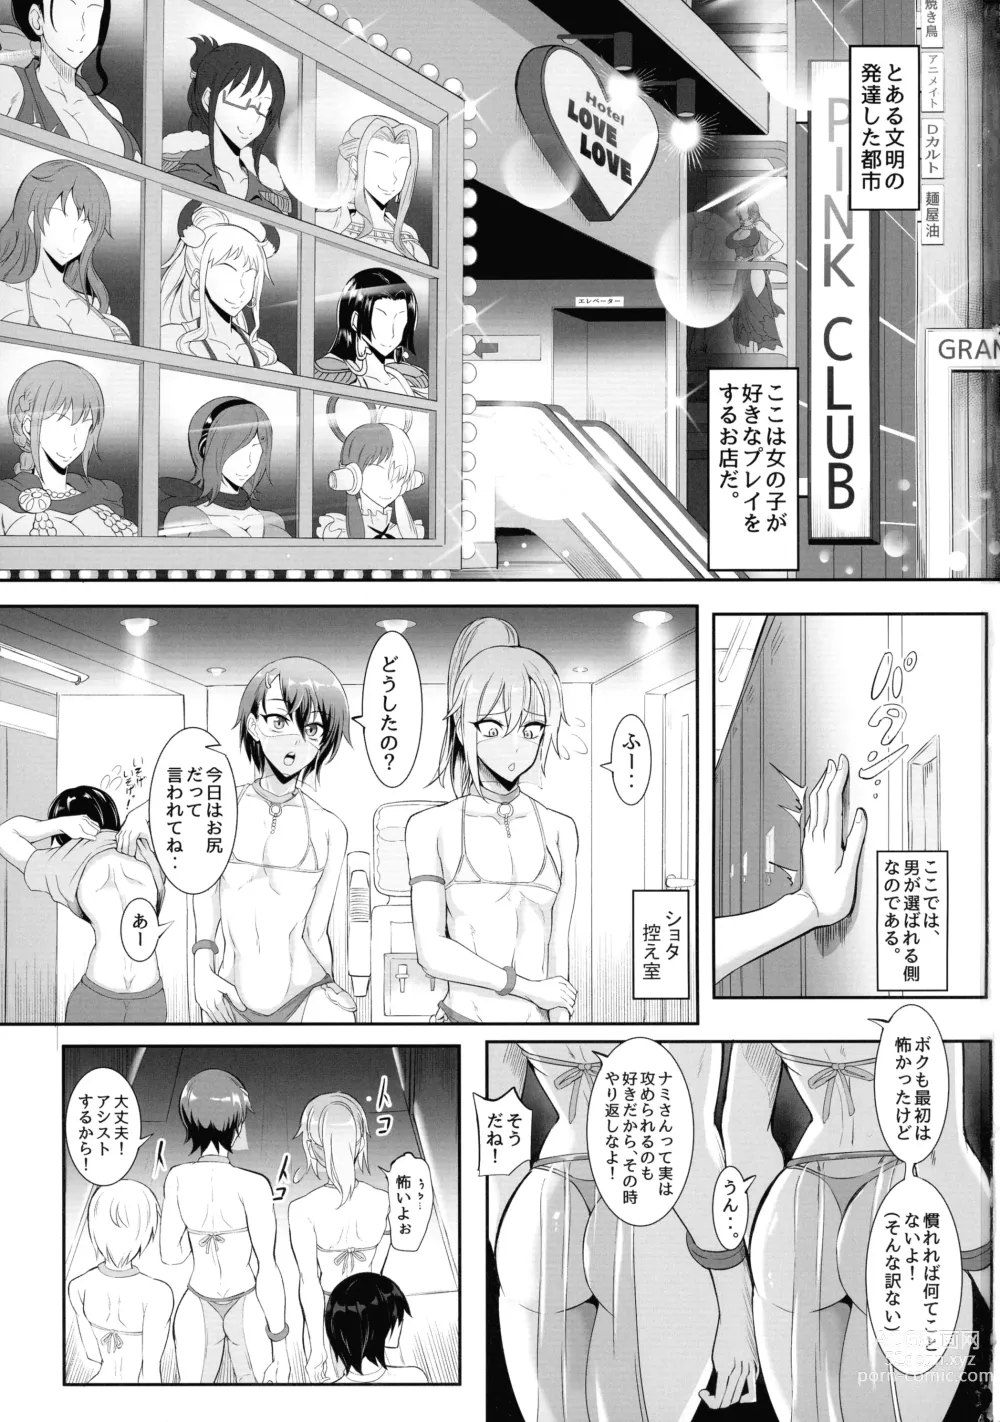 Page 3 of doujinshi Pirate Girls 3